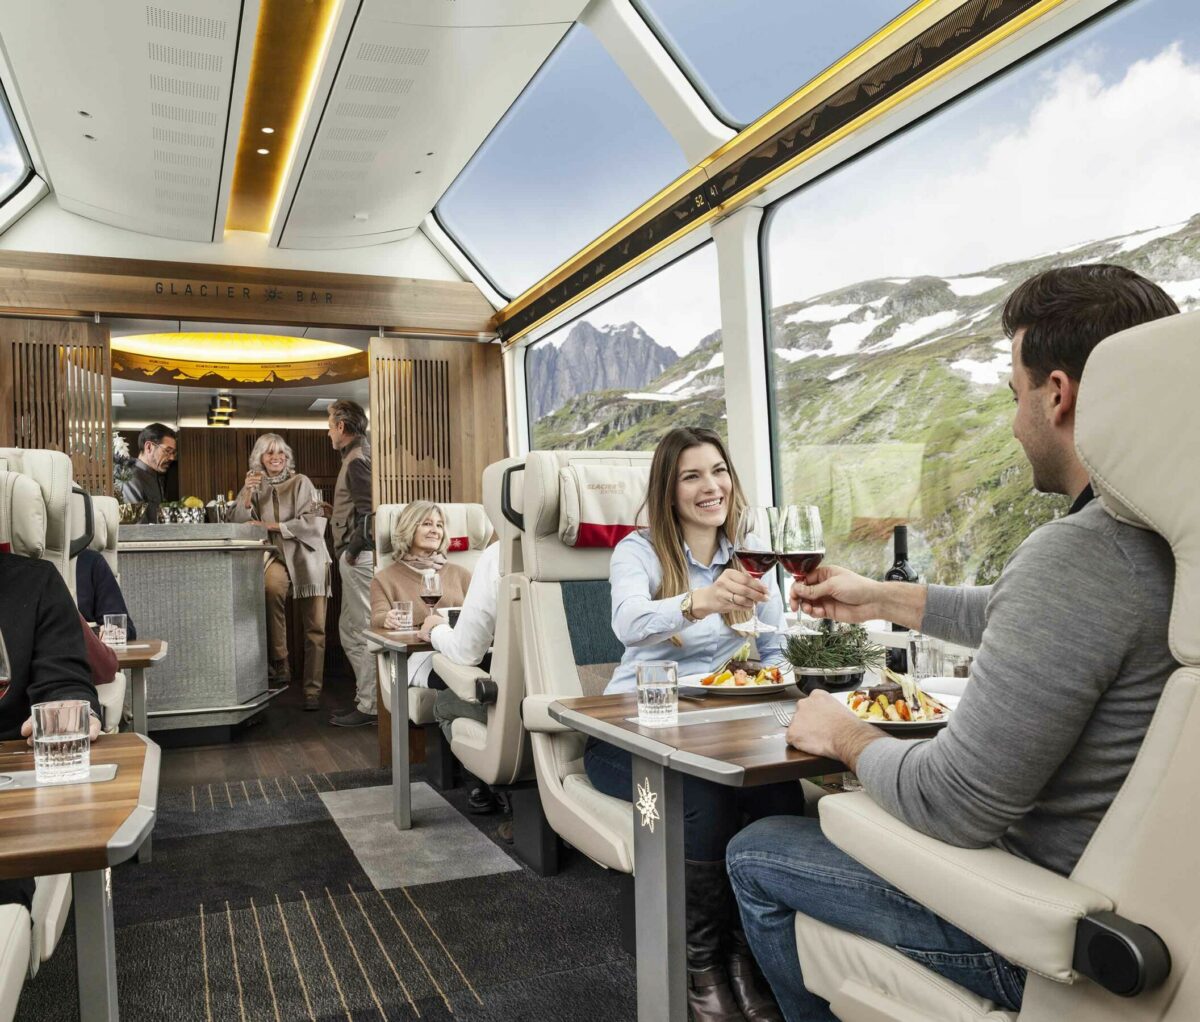 Passengers enjoying lunch on a luxury train journey